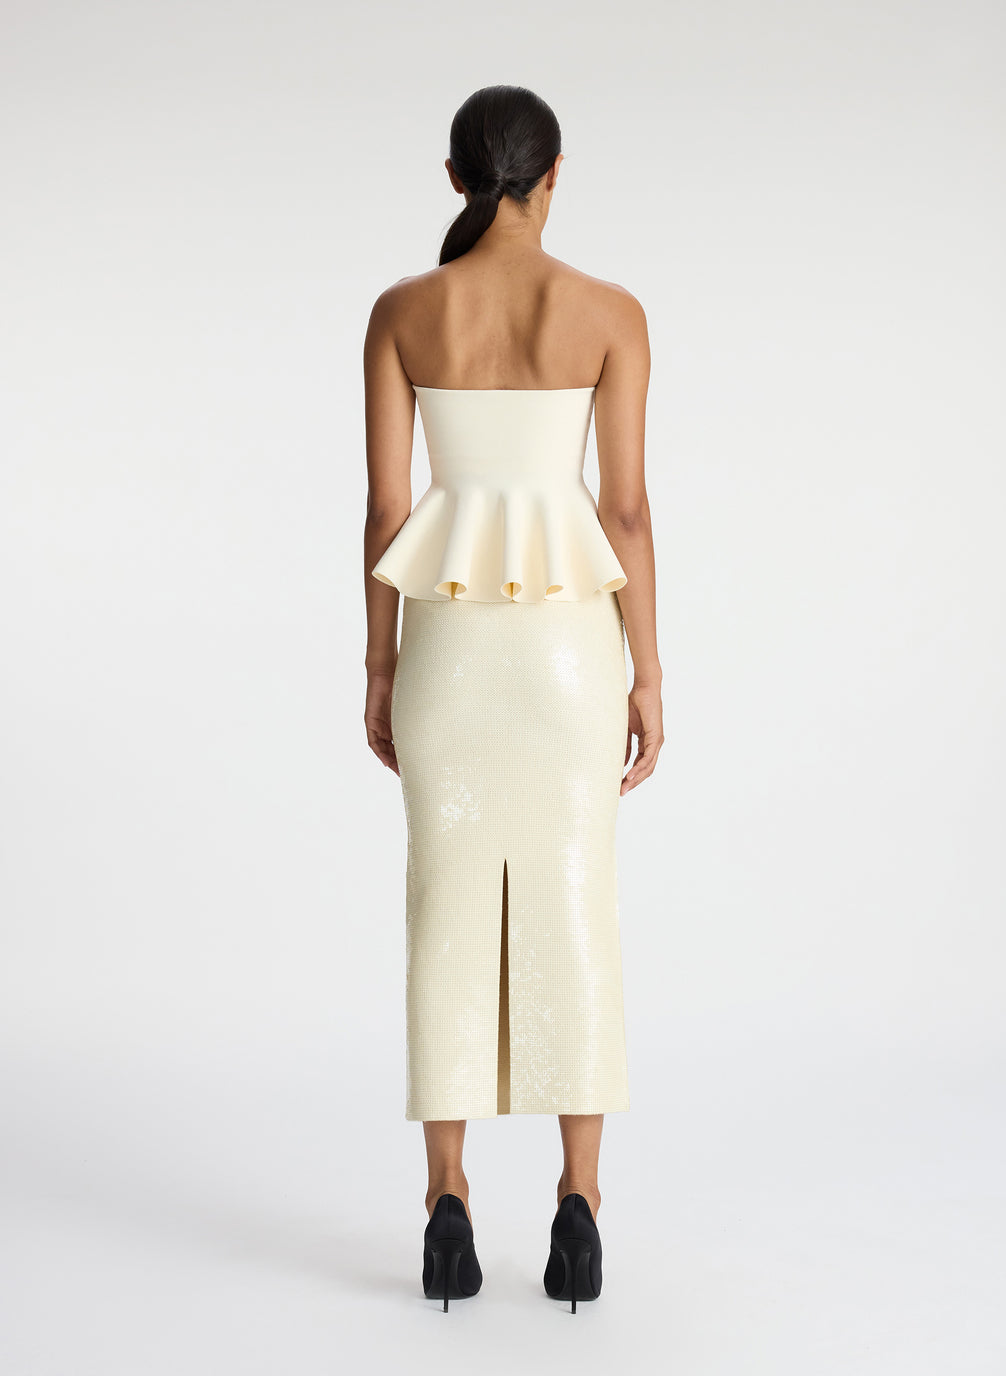 back view of woman wearing cream strapless peplum top and cream sequined midi skirt